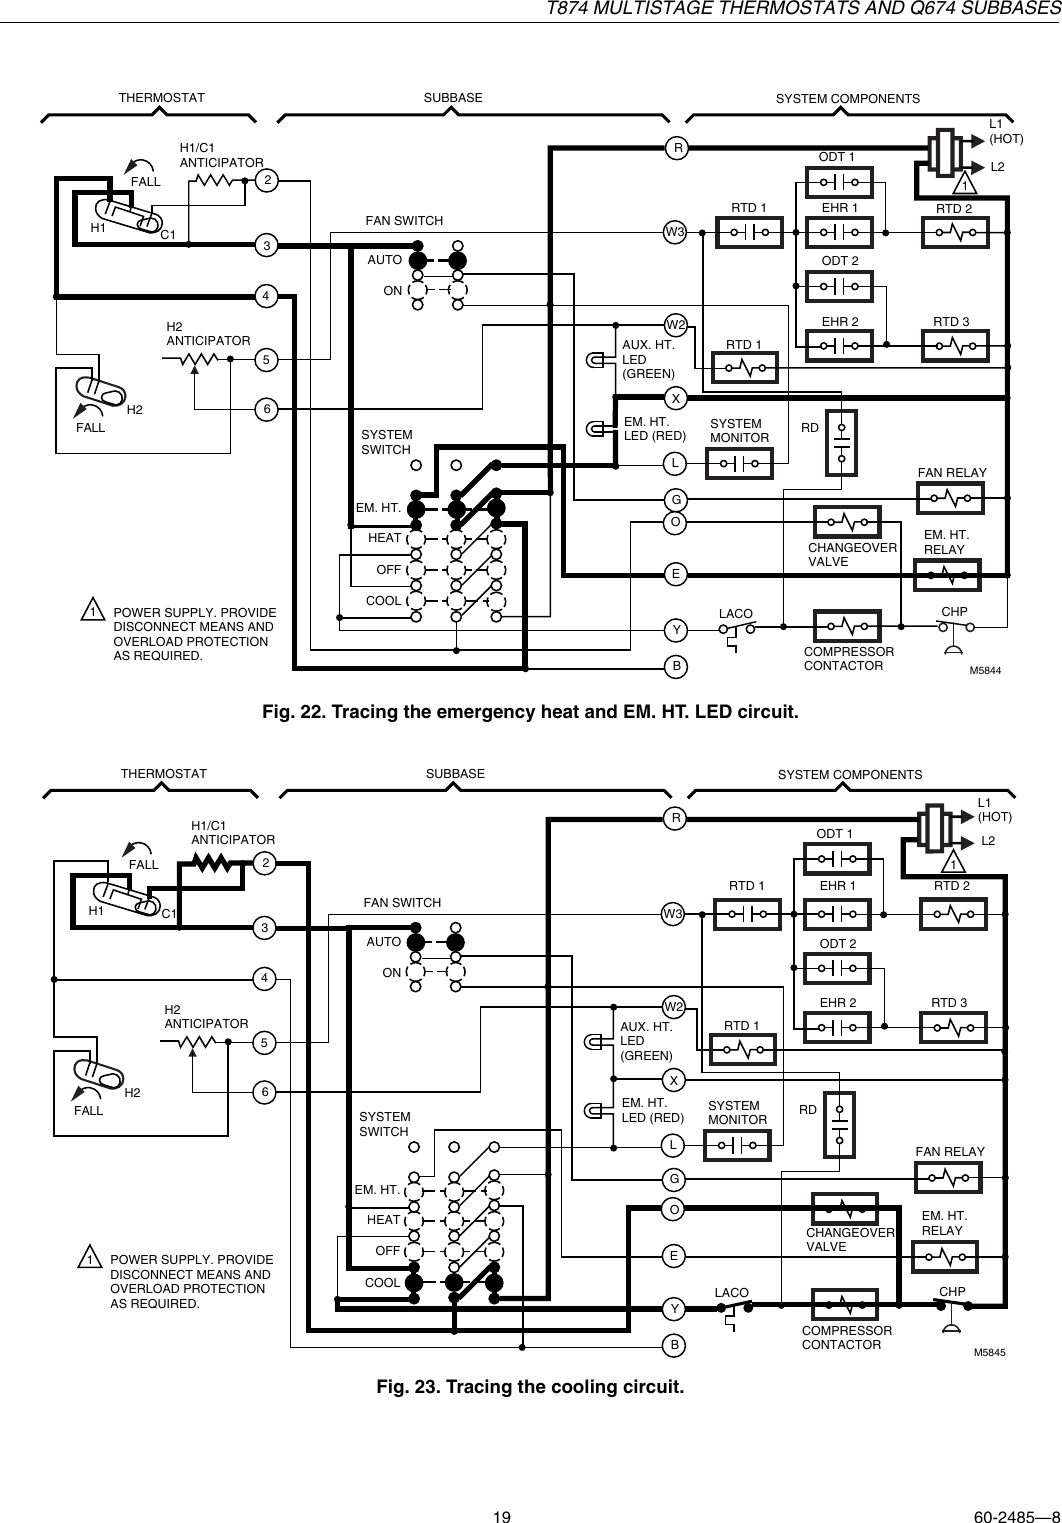 Luxaire Ga Furnace Wiring Diagram - Wiring Diagram